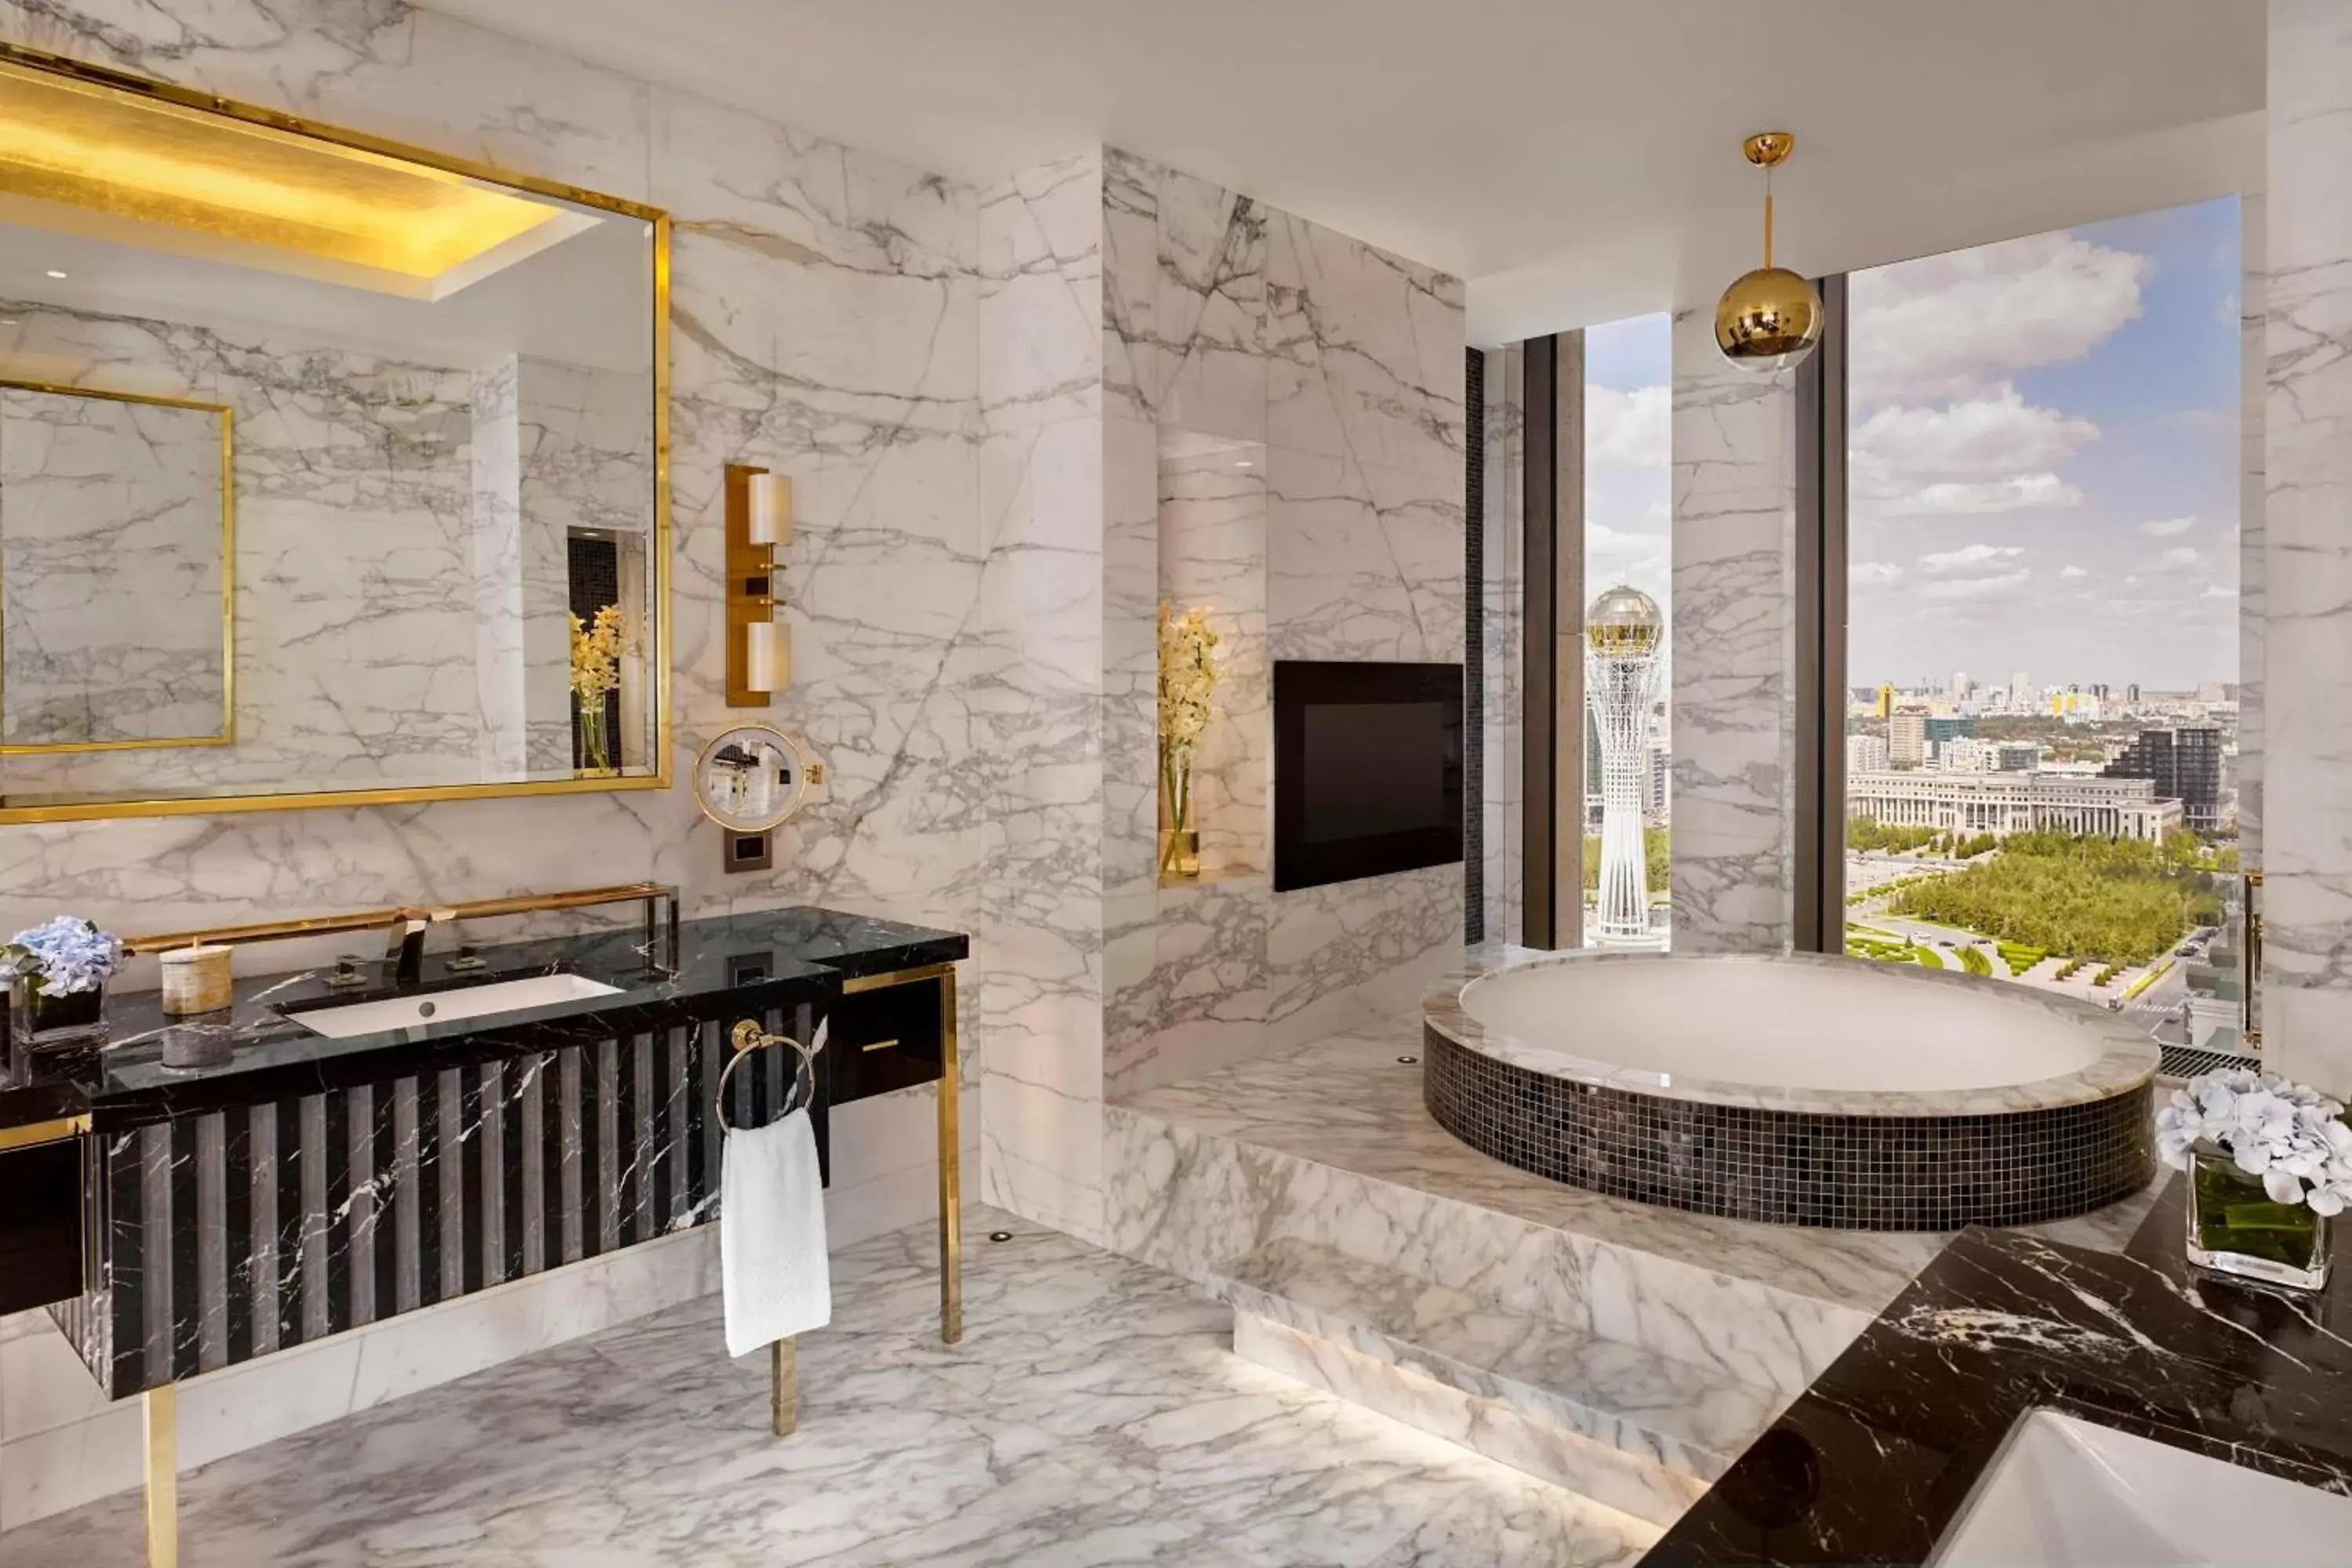 Photo of the whole room, Bathroom in The Ritz-Carlton, Astana